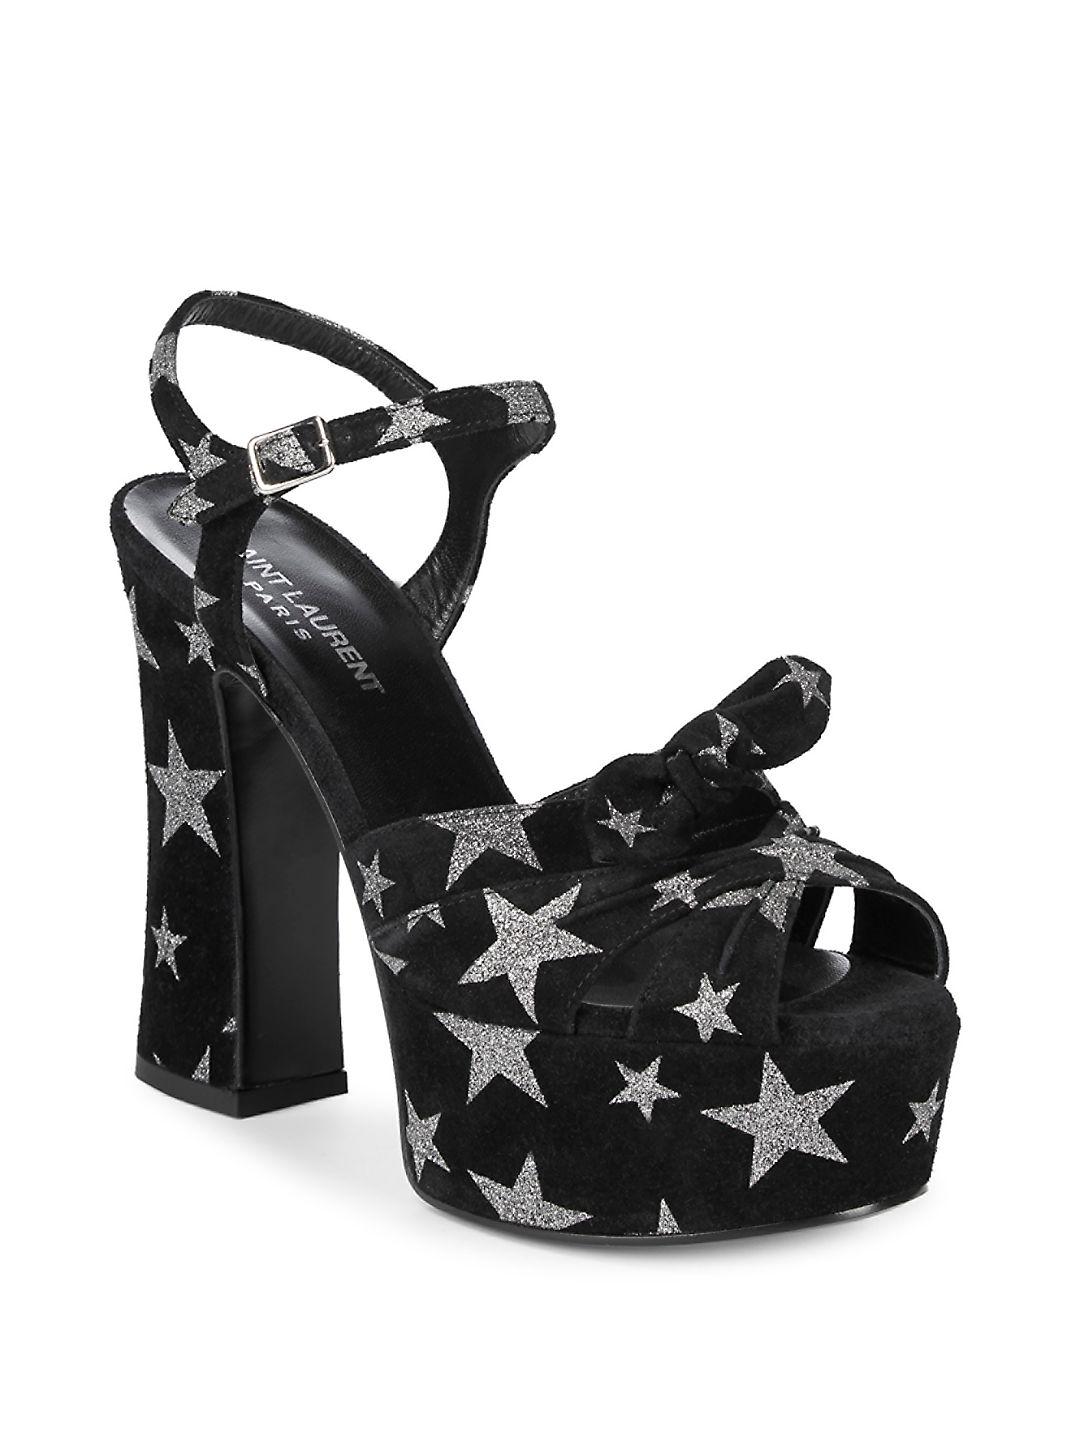 Saint Laurent Star Print Platform Sandals in Black | Lyst